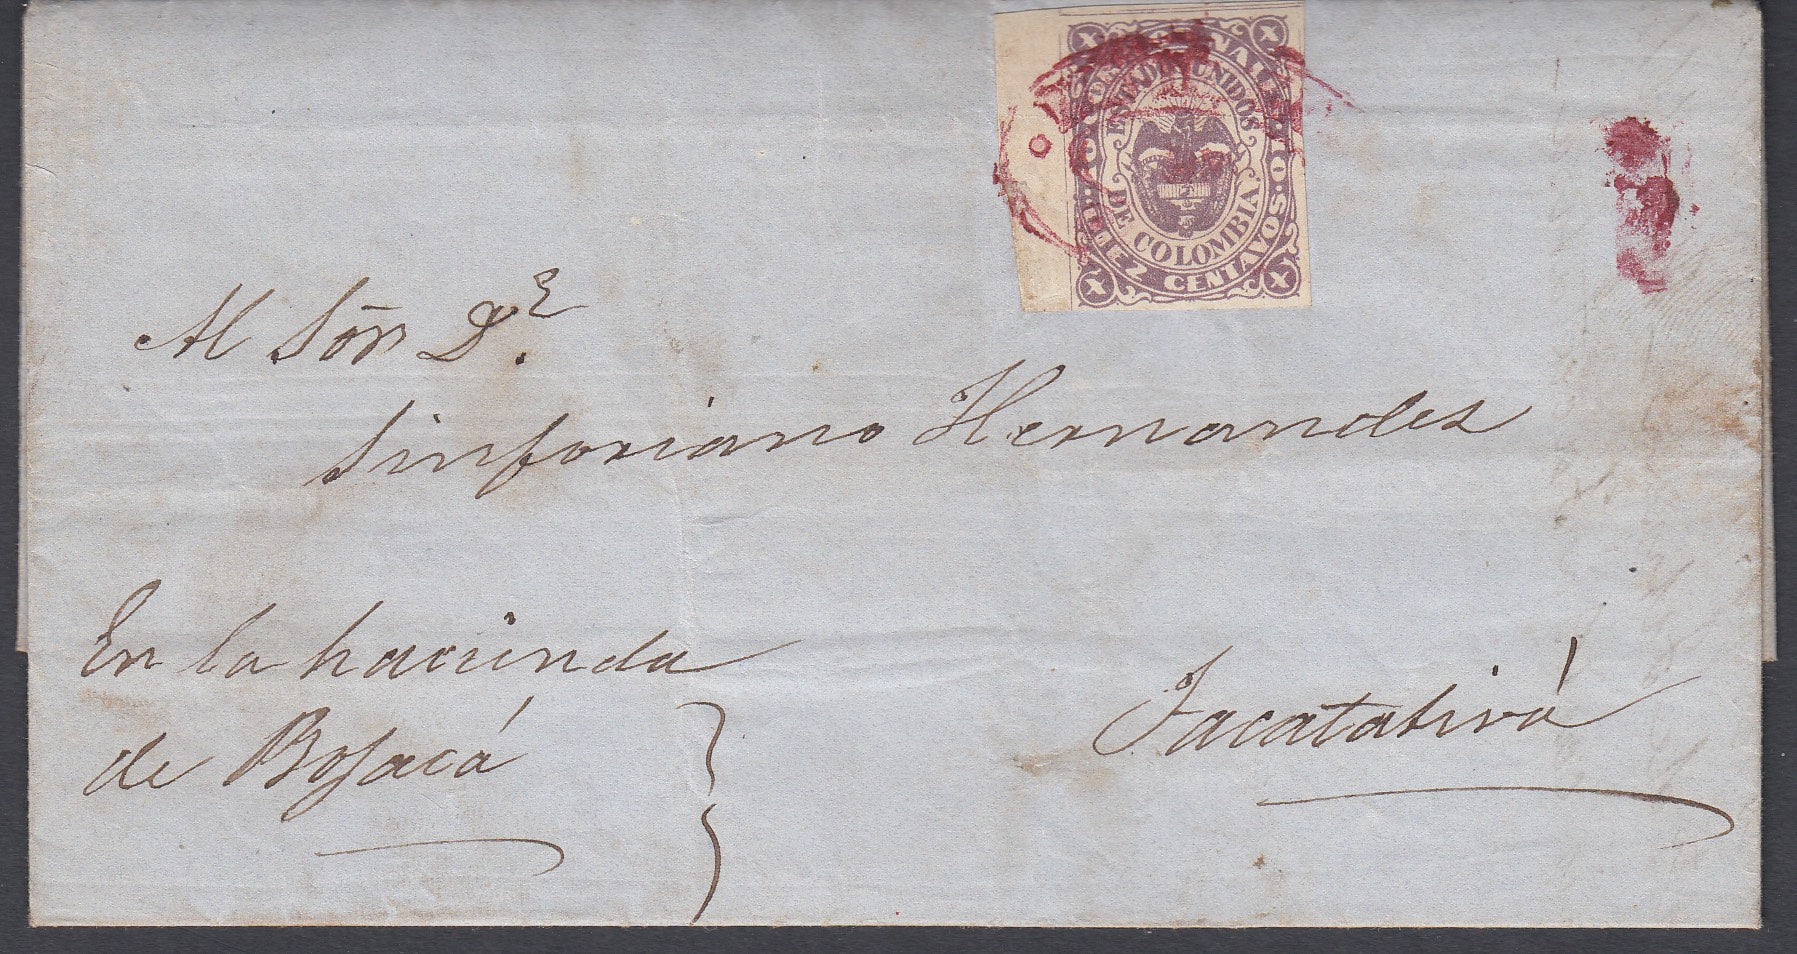 Colombia 1869 Boyaca to Facatativa Entire, tied with 1868 10c Lilac